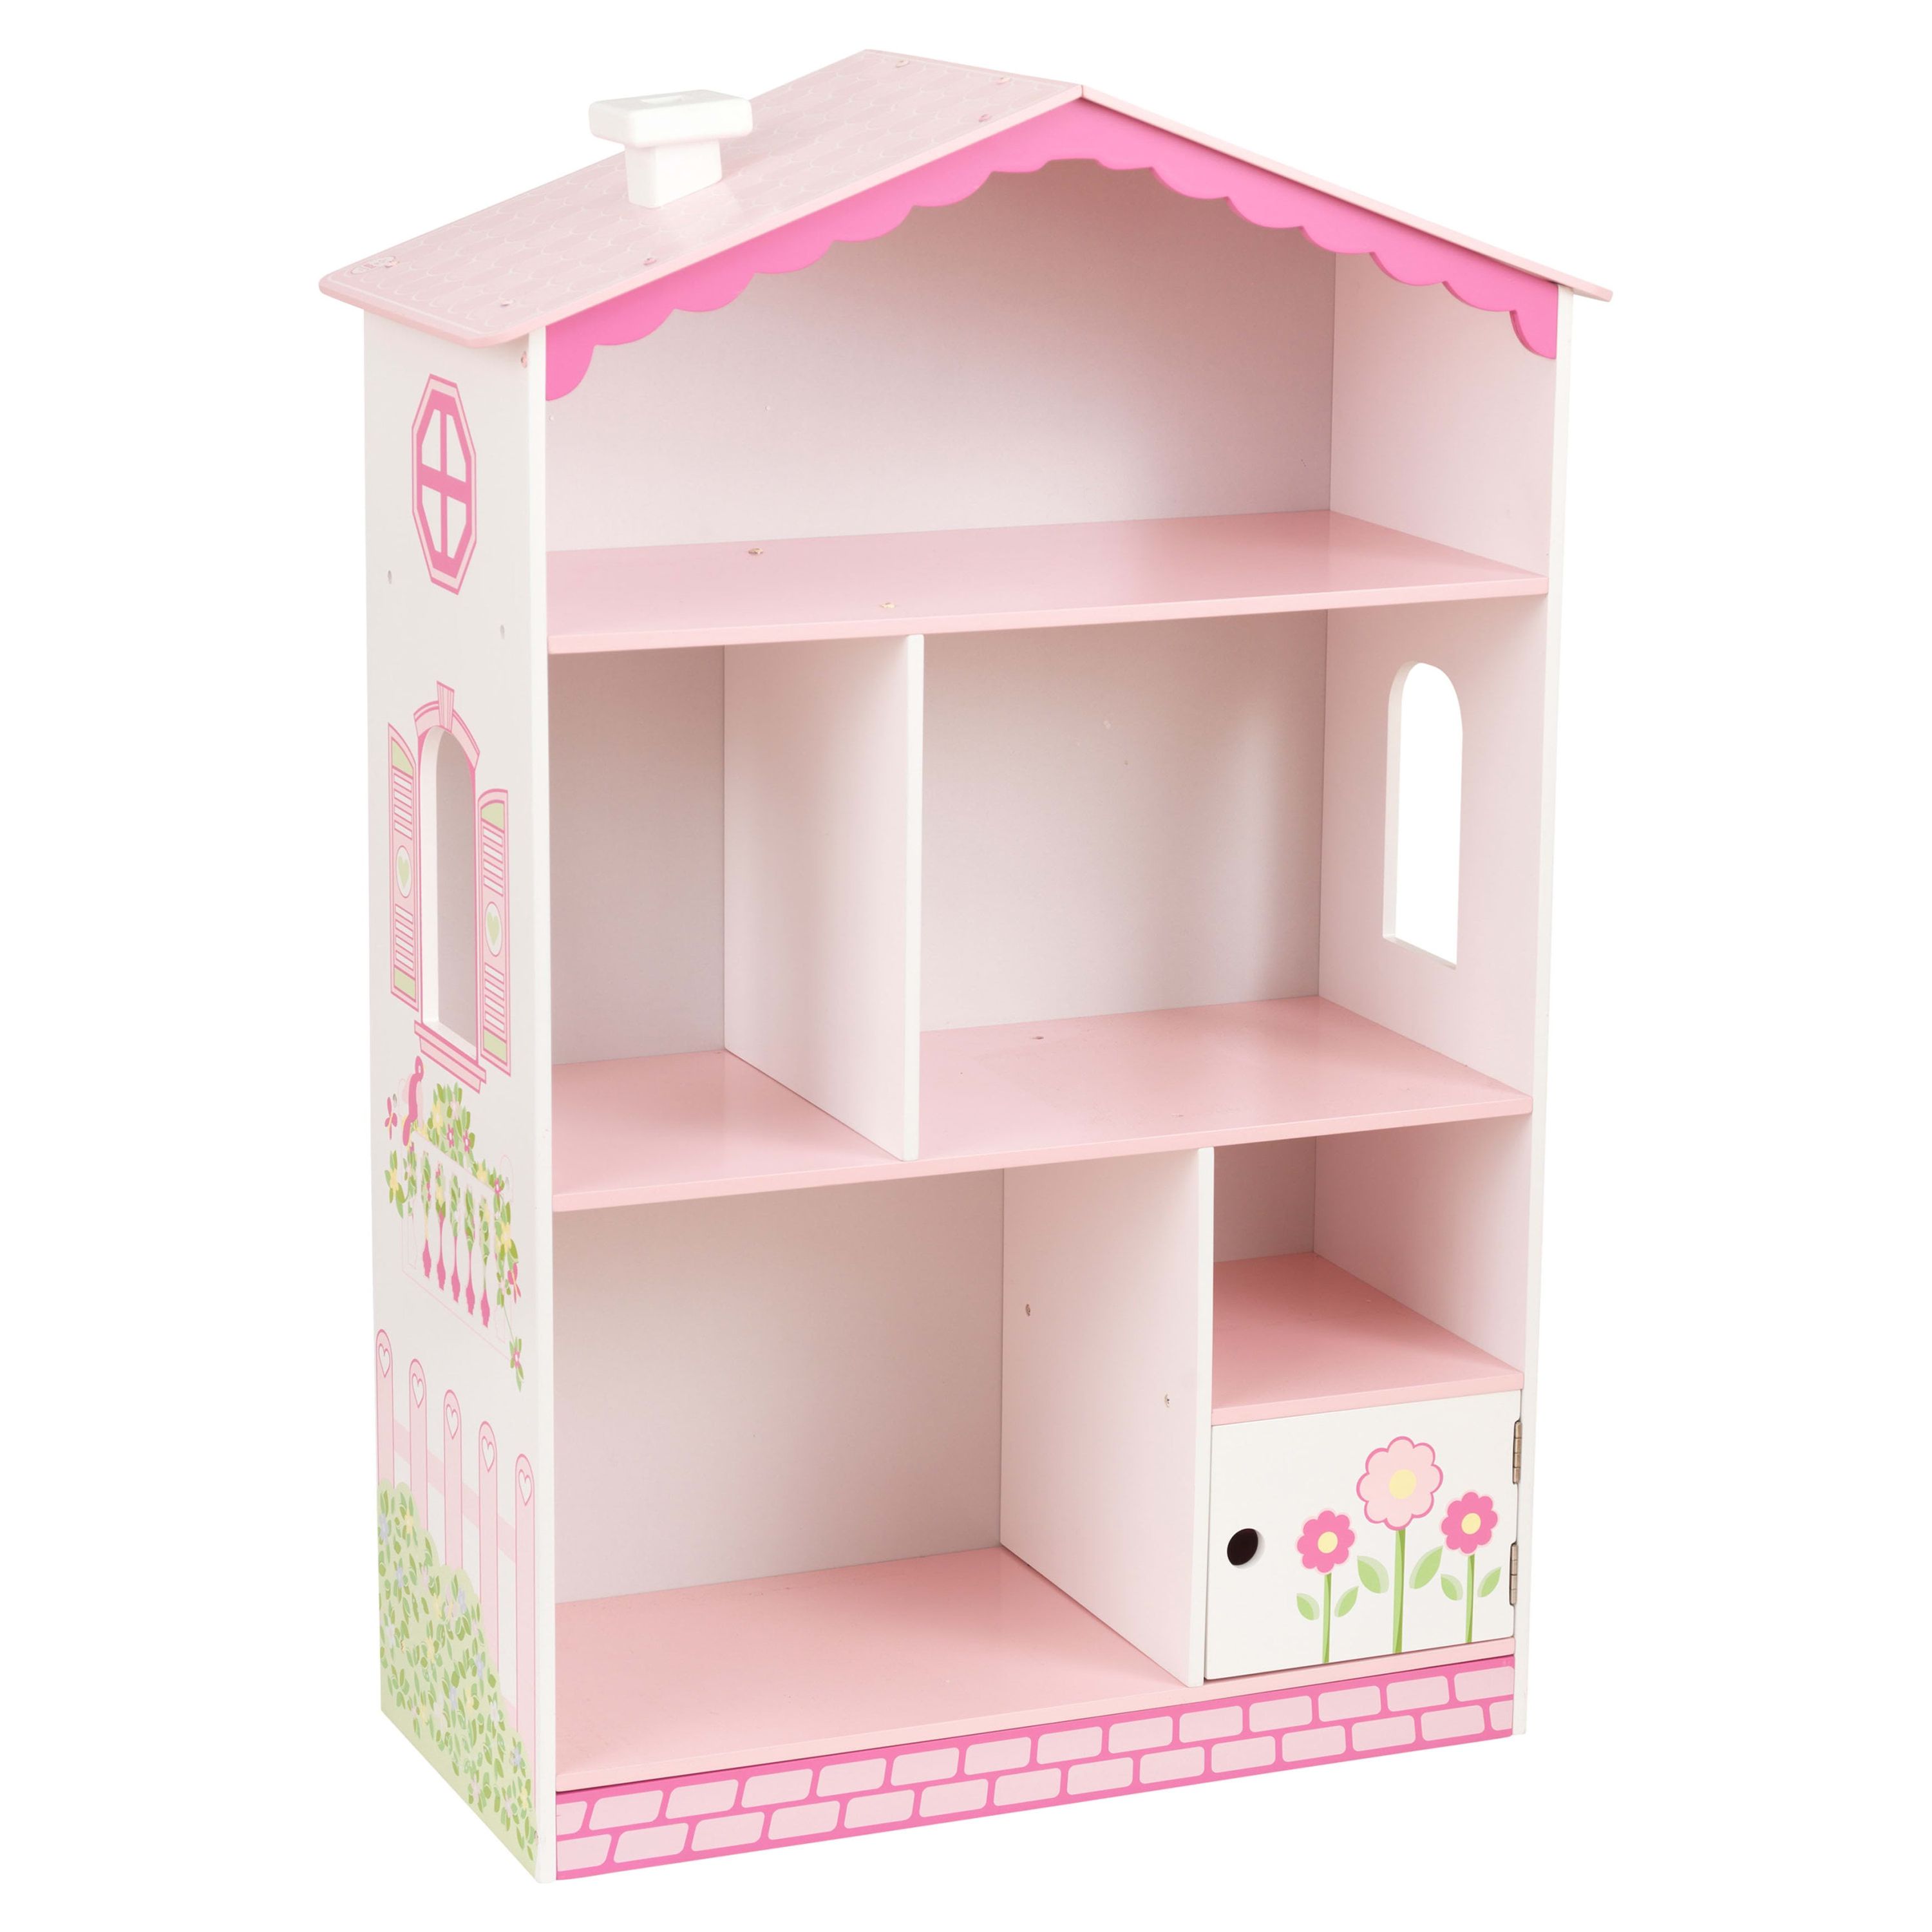 KidKraft Dollhouse Cottage Wooden Bookcase, Pink & White - image 1 of 10